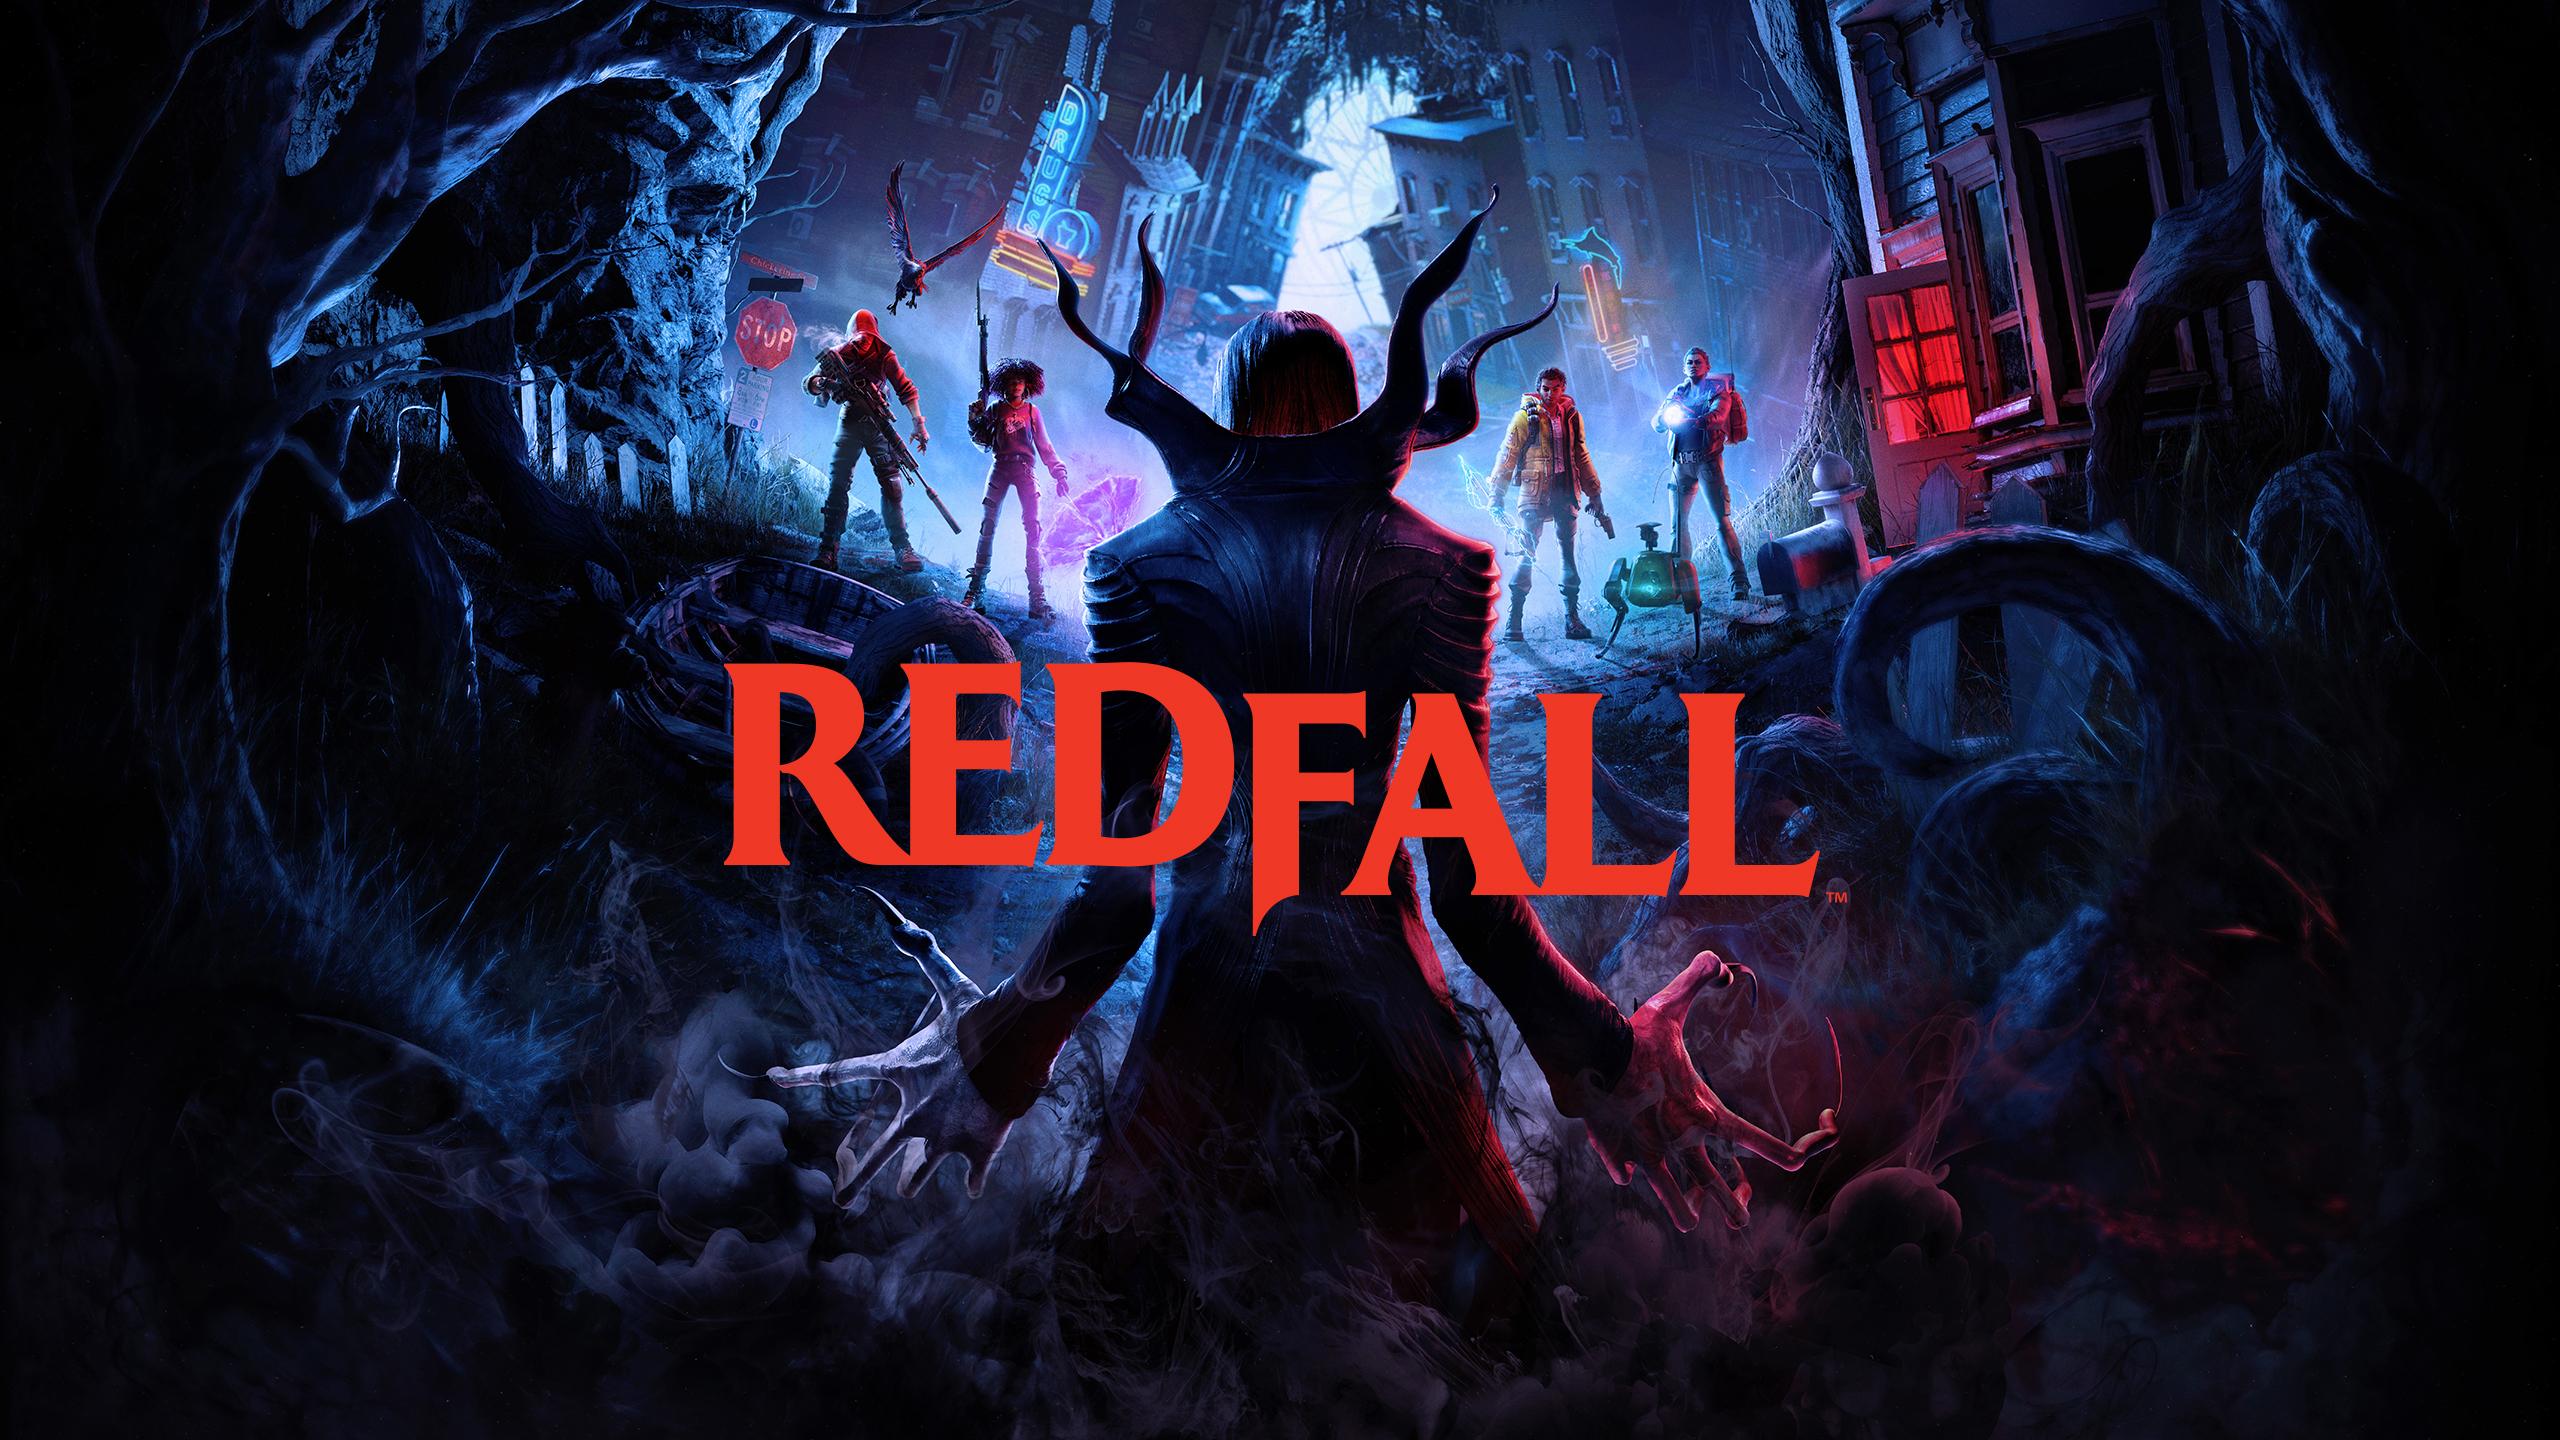 Radiator Blog: Design review of Redfall by Arkane Studios Austin